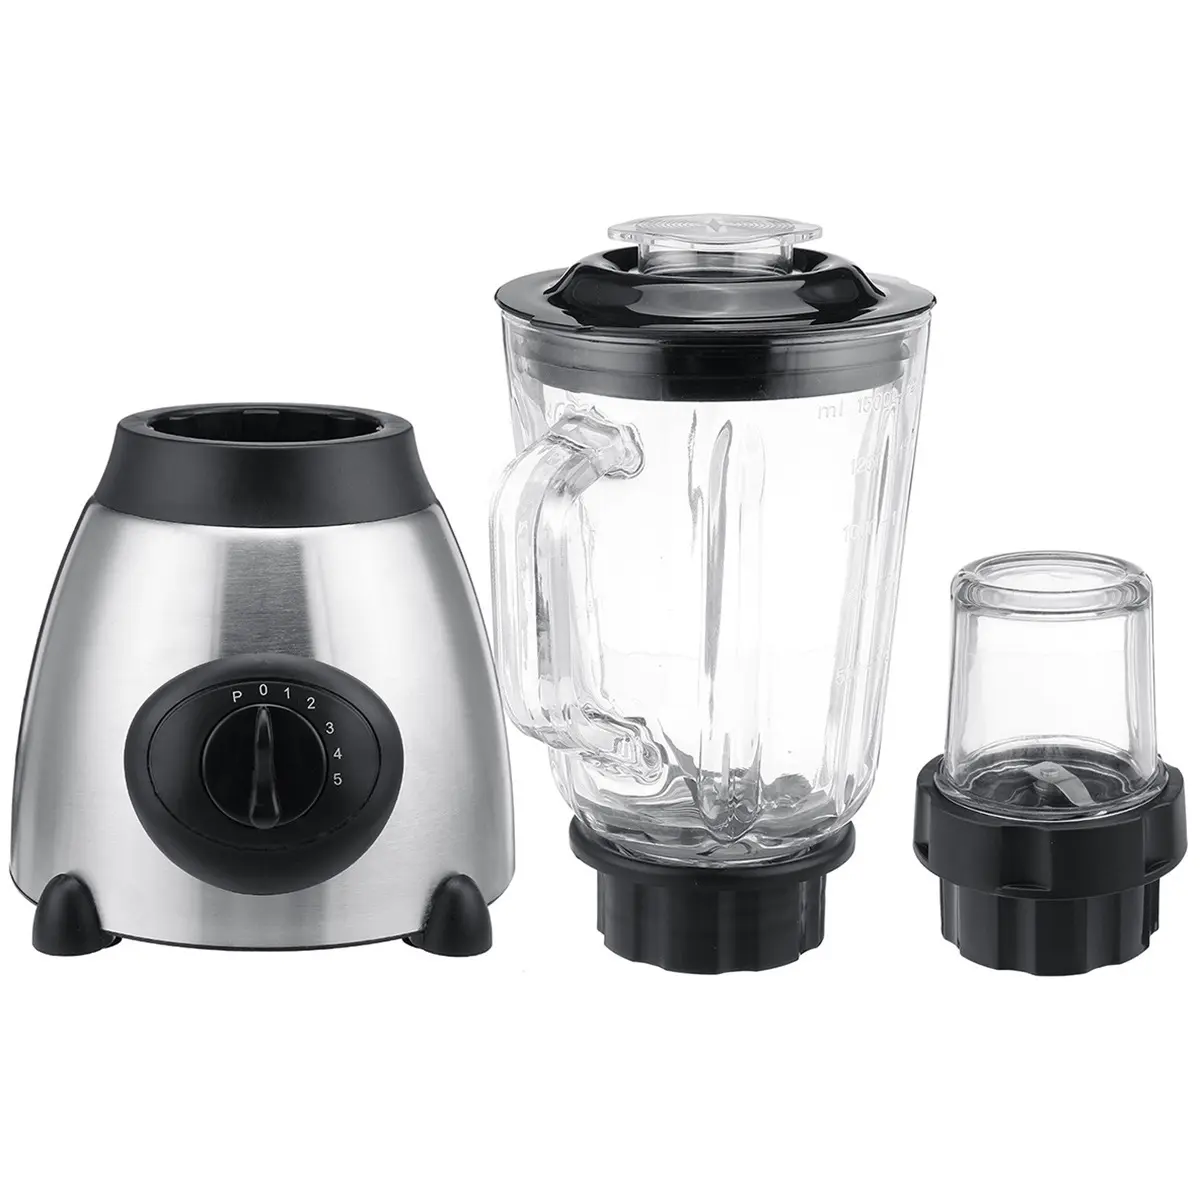 Factory Direct Home Appliances Kitchen Milkshake Machine Silver Crest High Speed Juicer Mixer And Blender